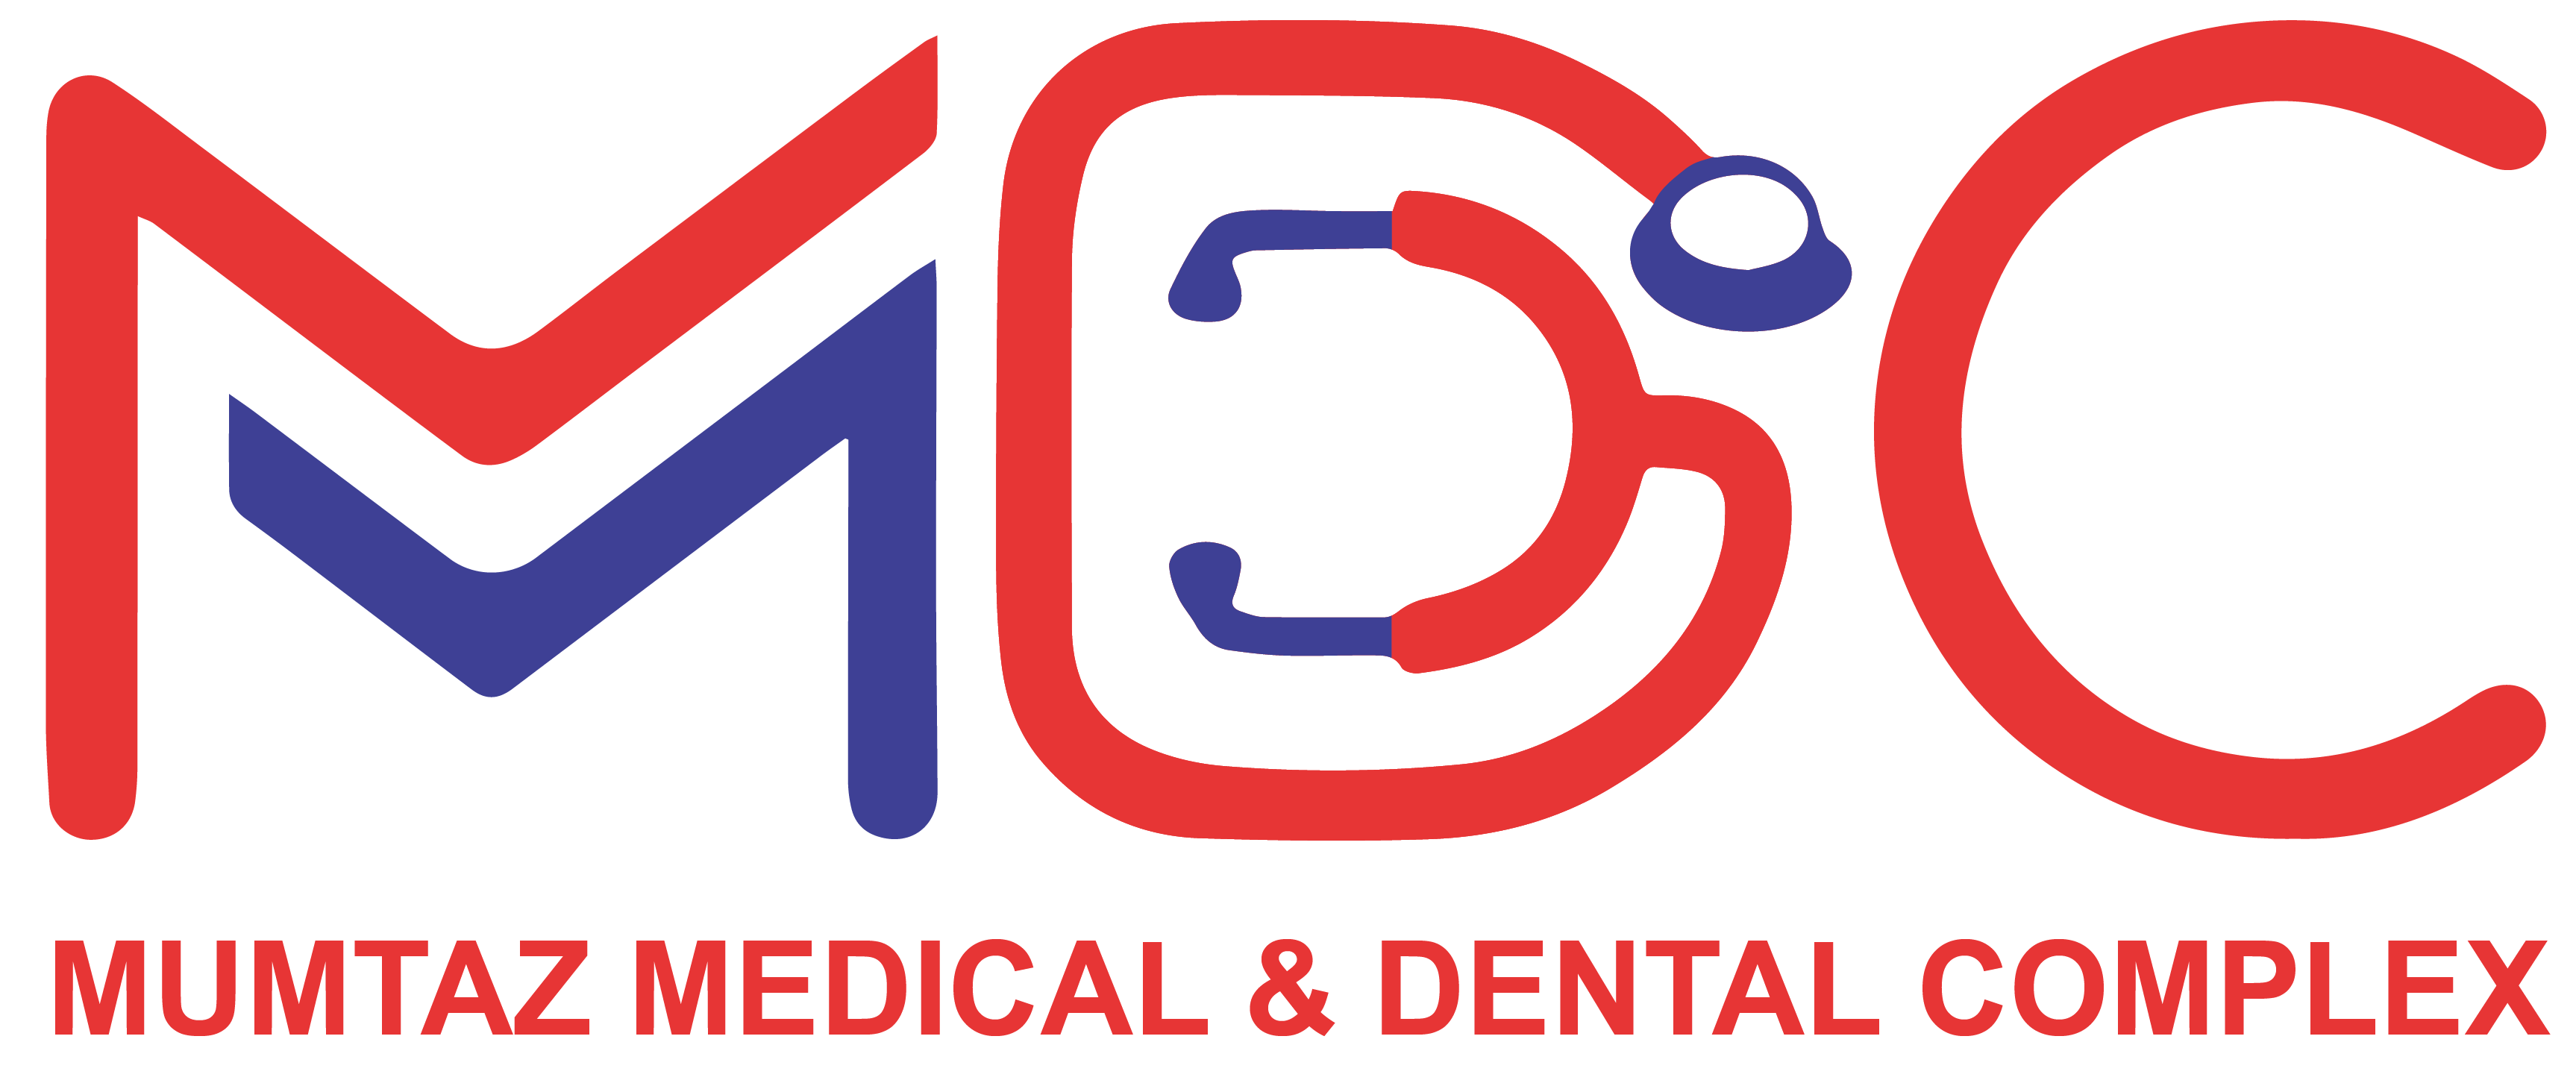 Mumtaz Medical & Dental Complex